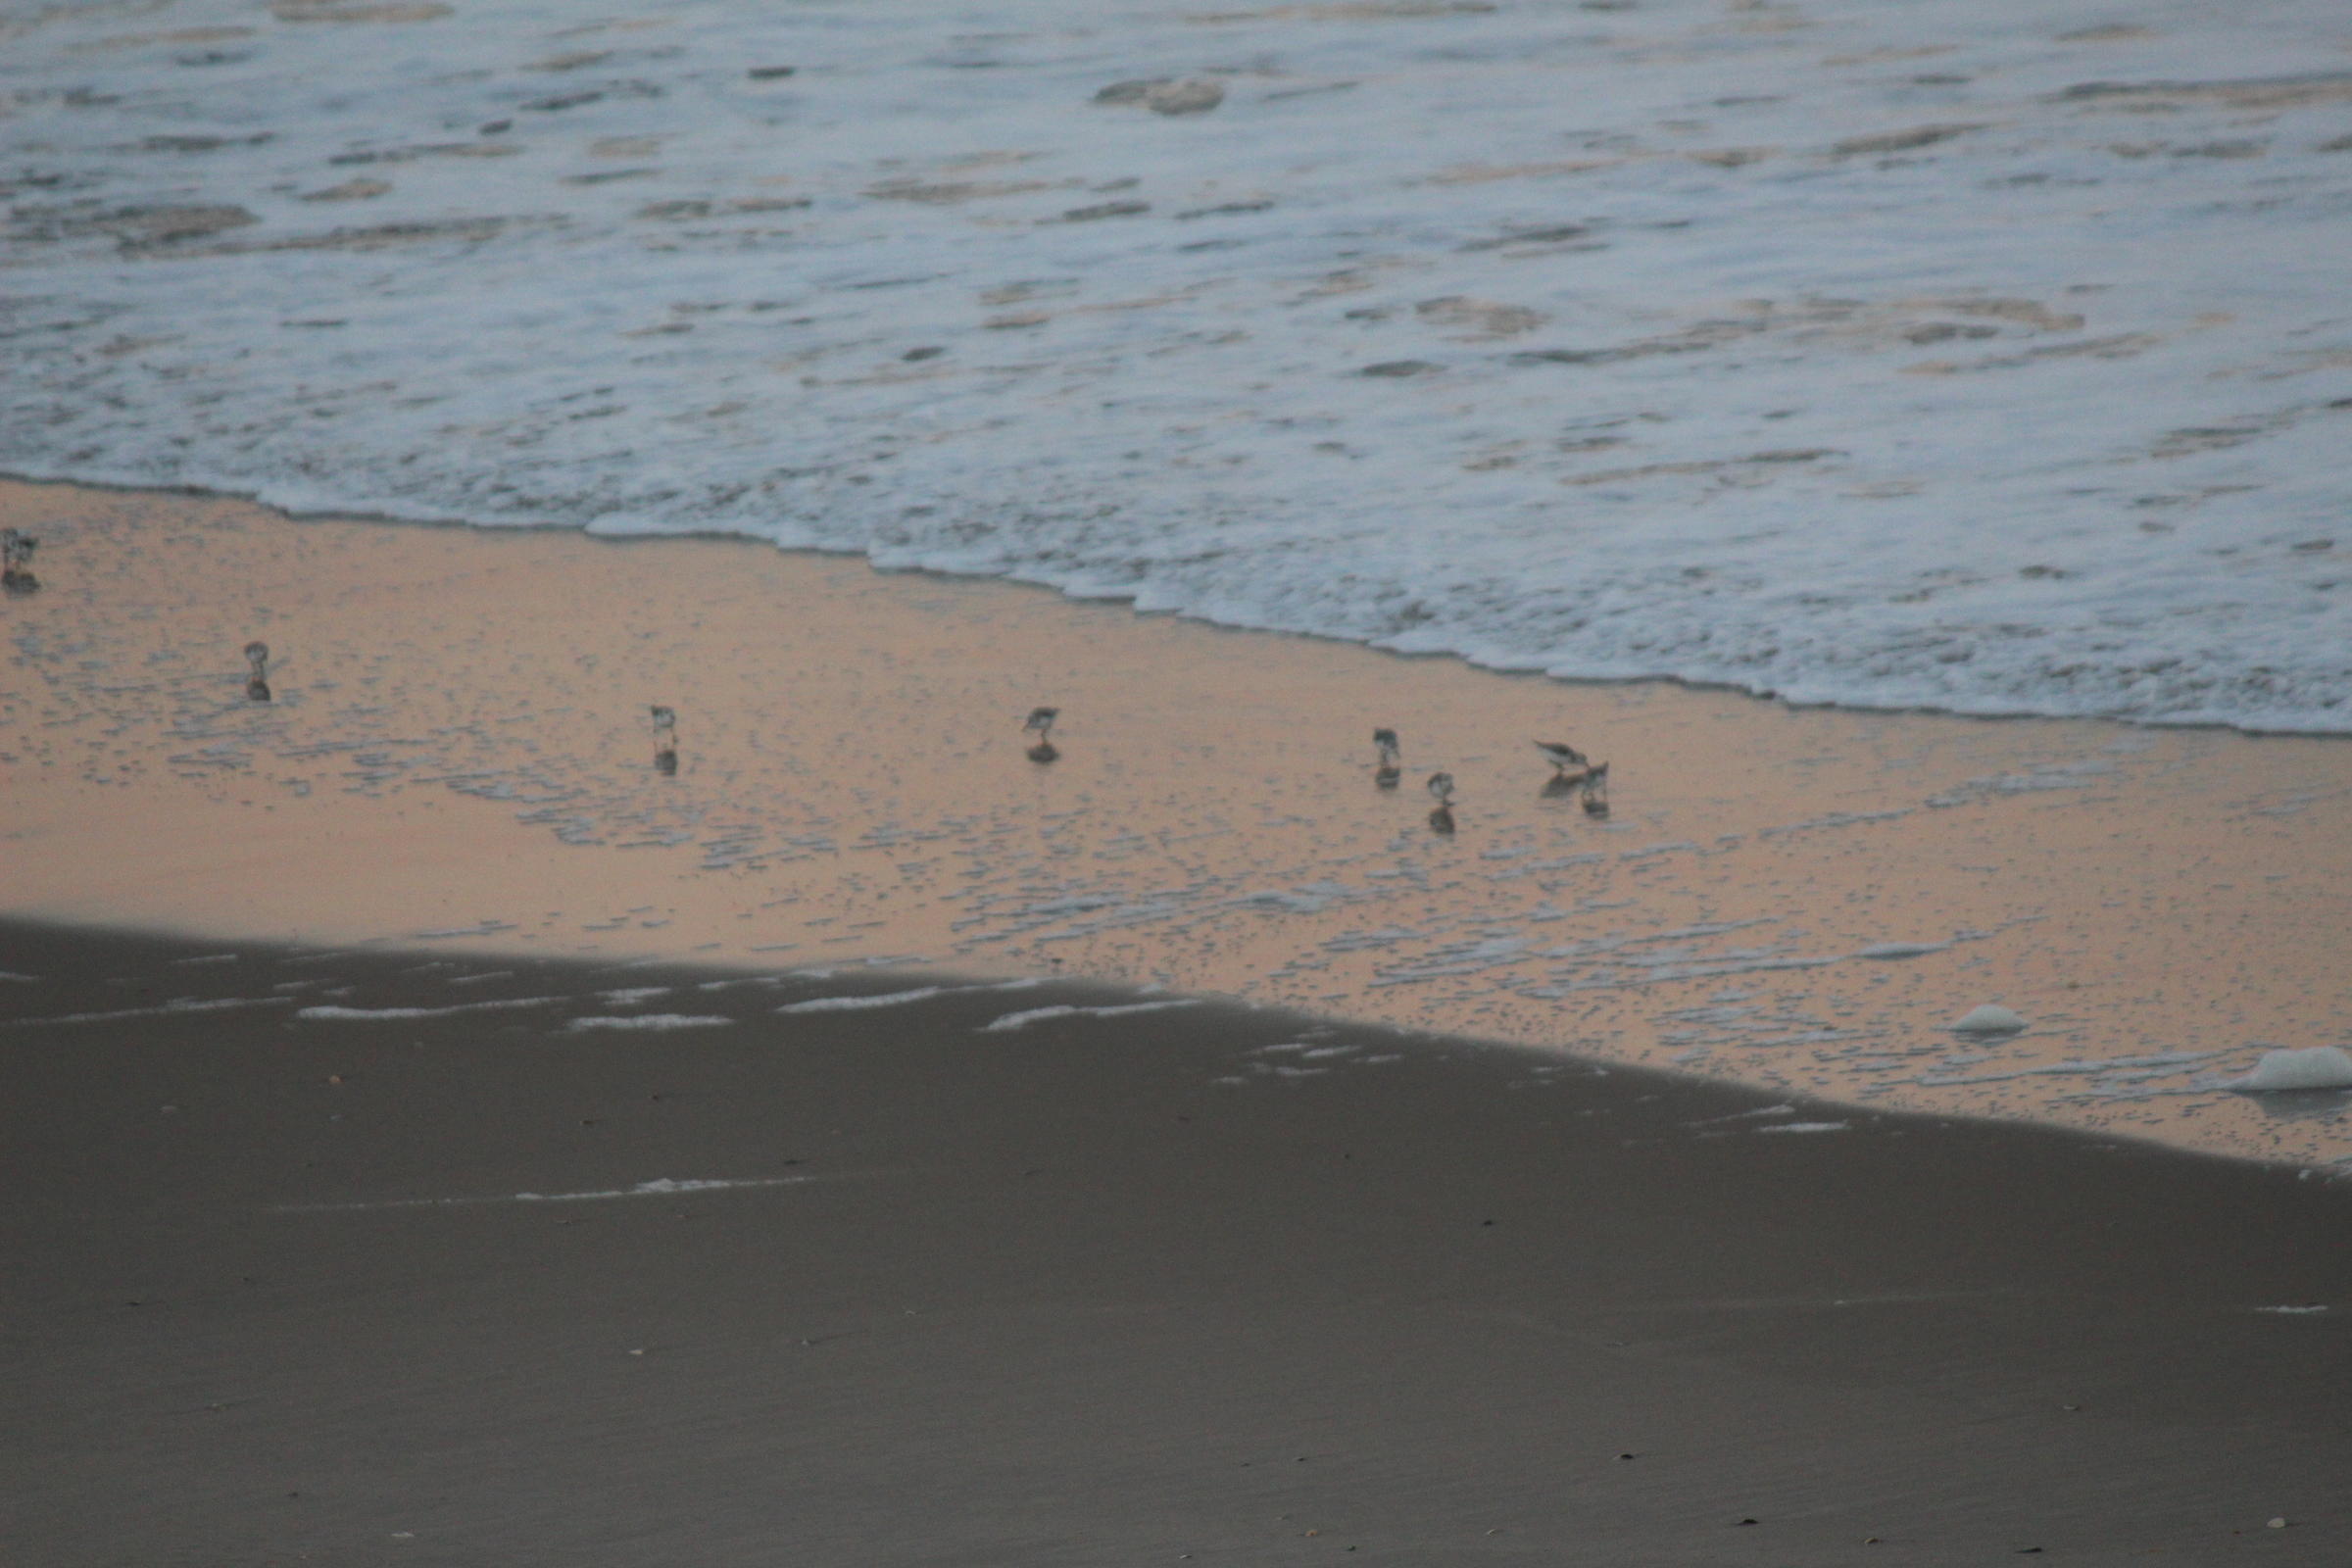 sandlerlings on the shore